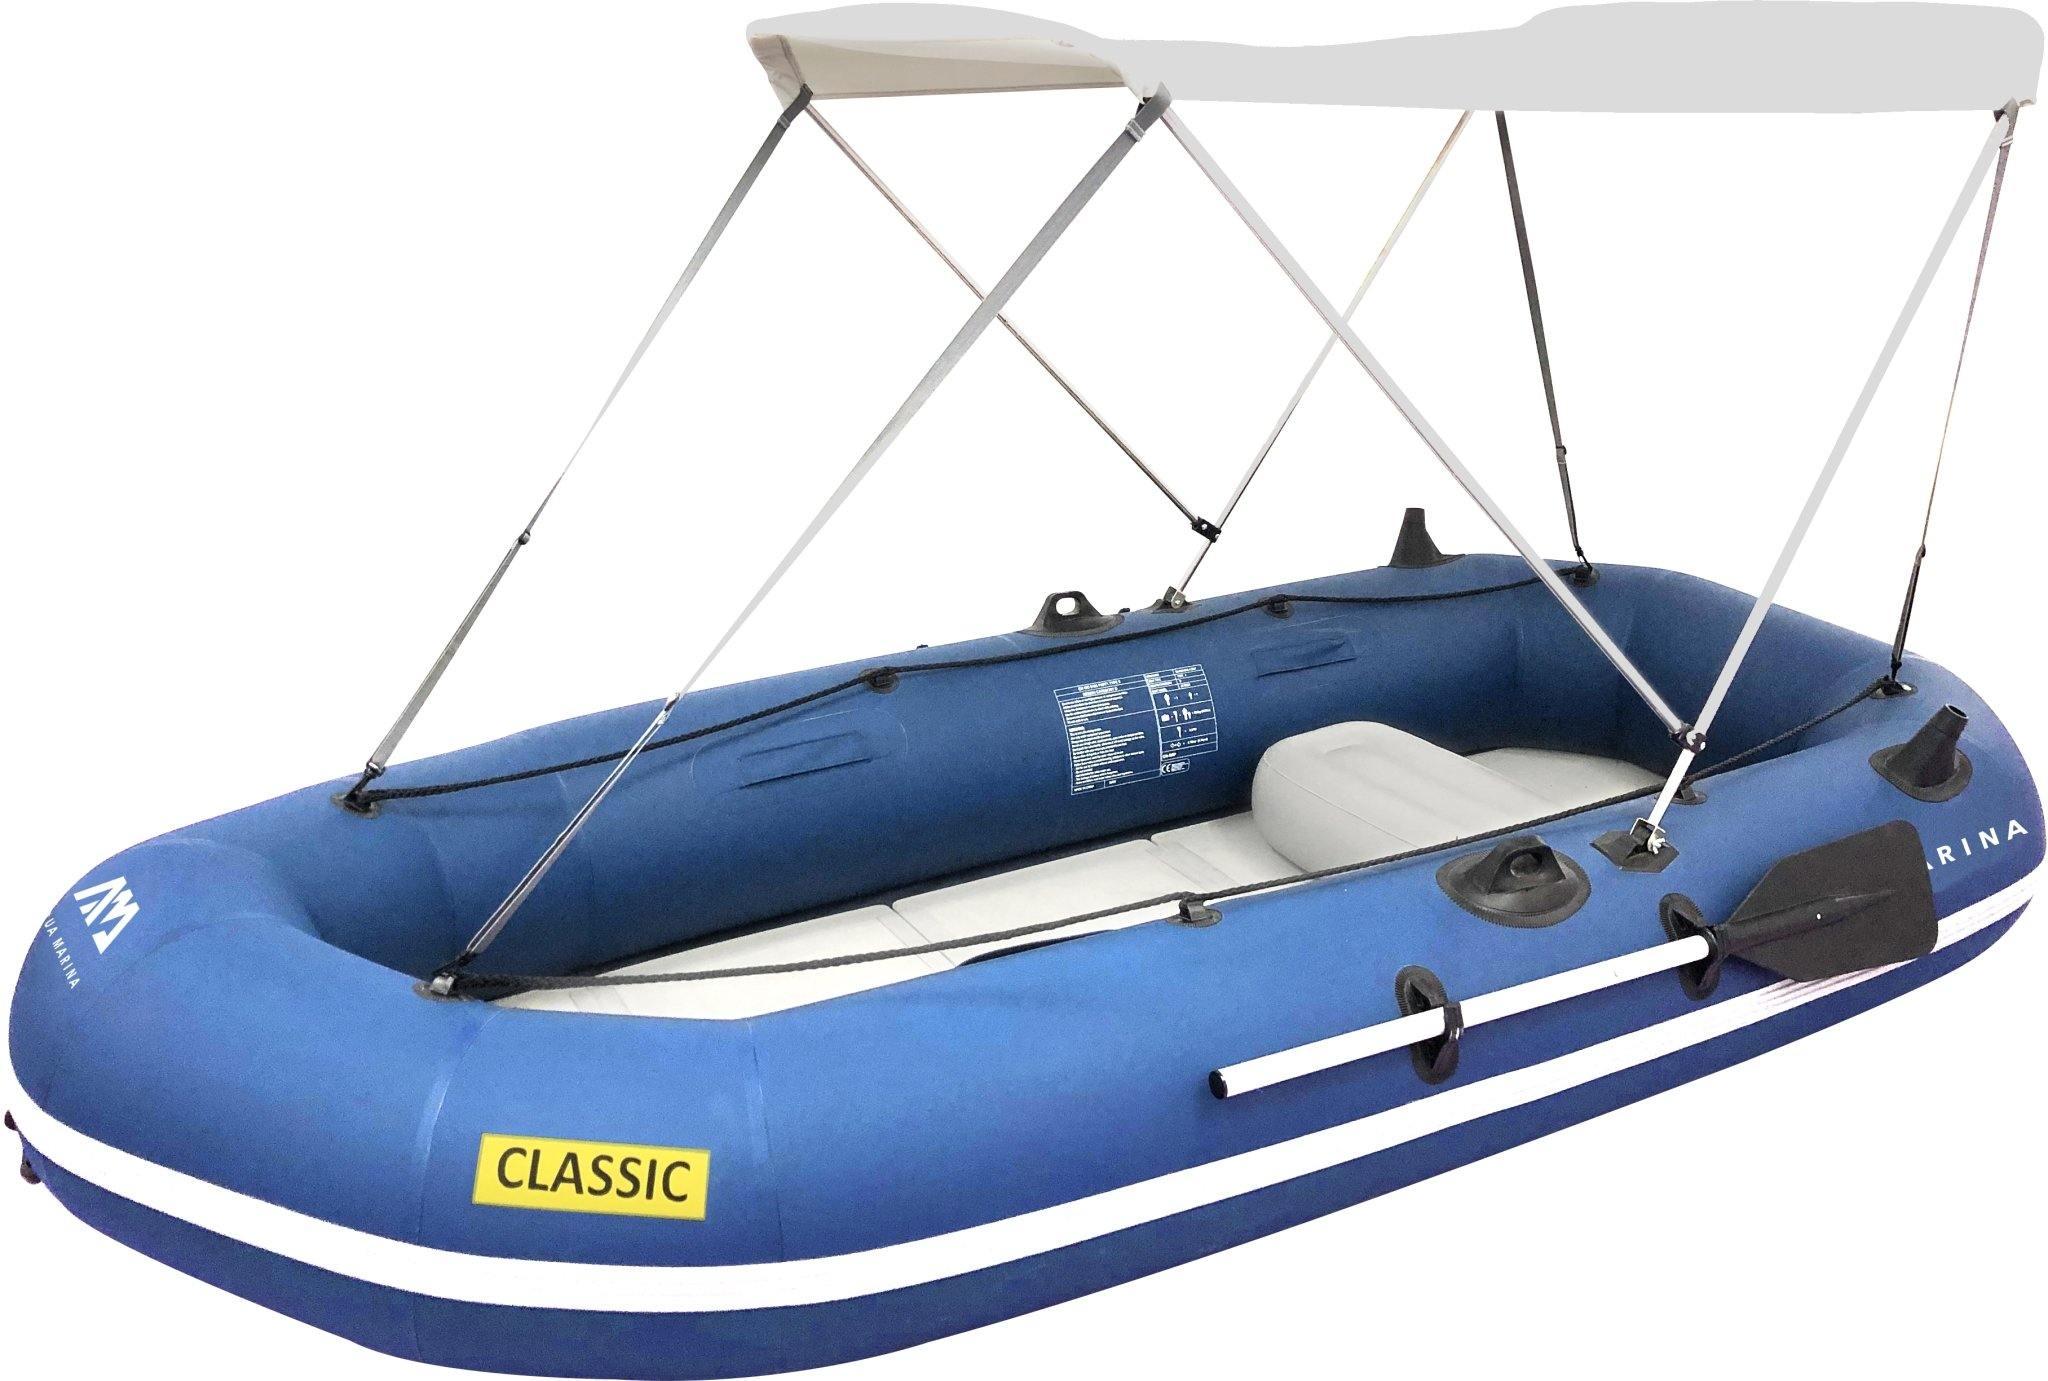 Speedy Boat Canopy - Dti Direct USA